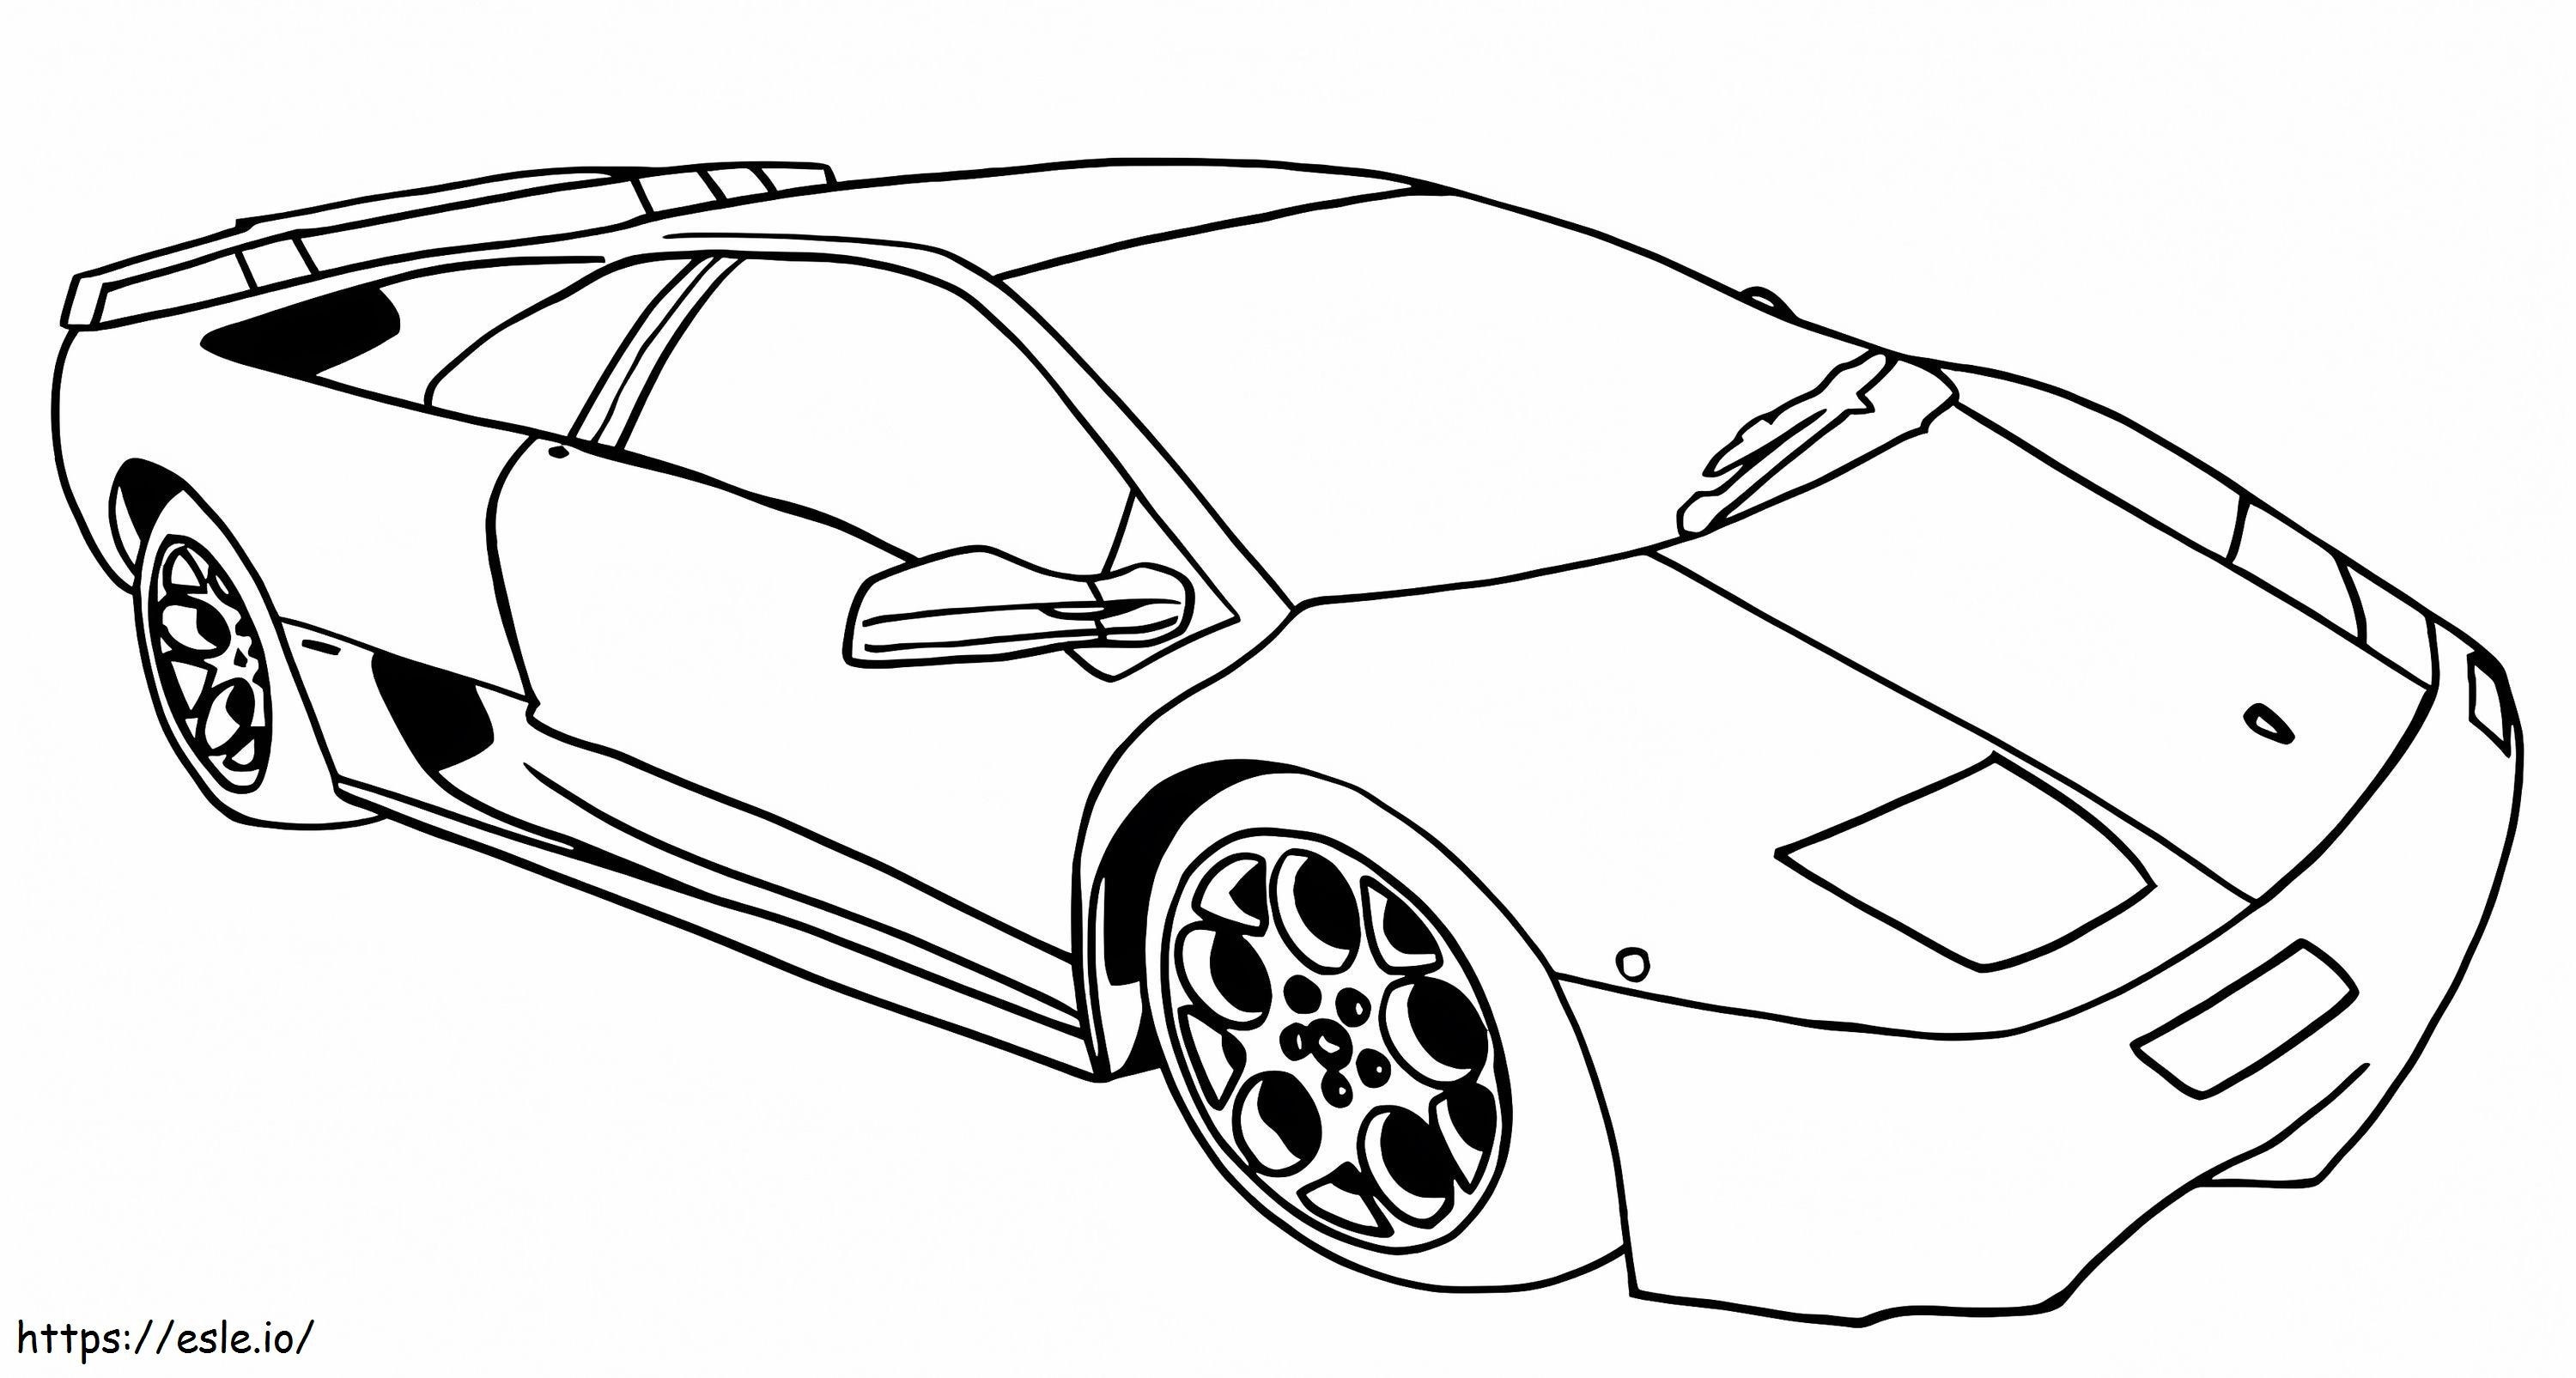 Coloriage  Lamborghini Diablo A4 à imprimer dessin